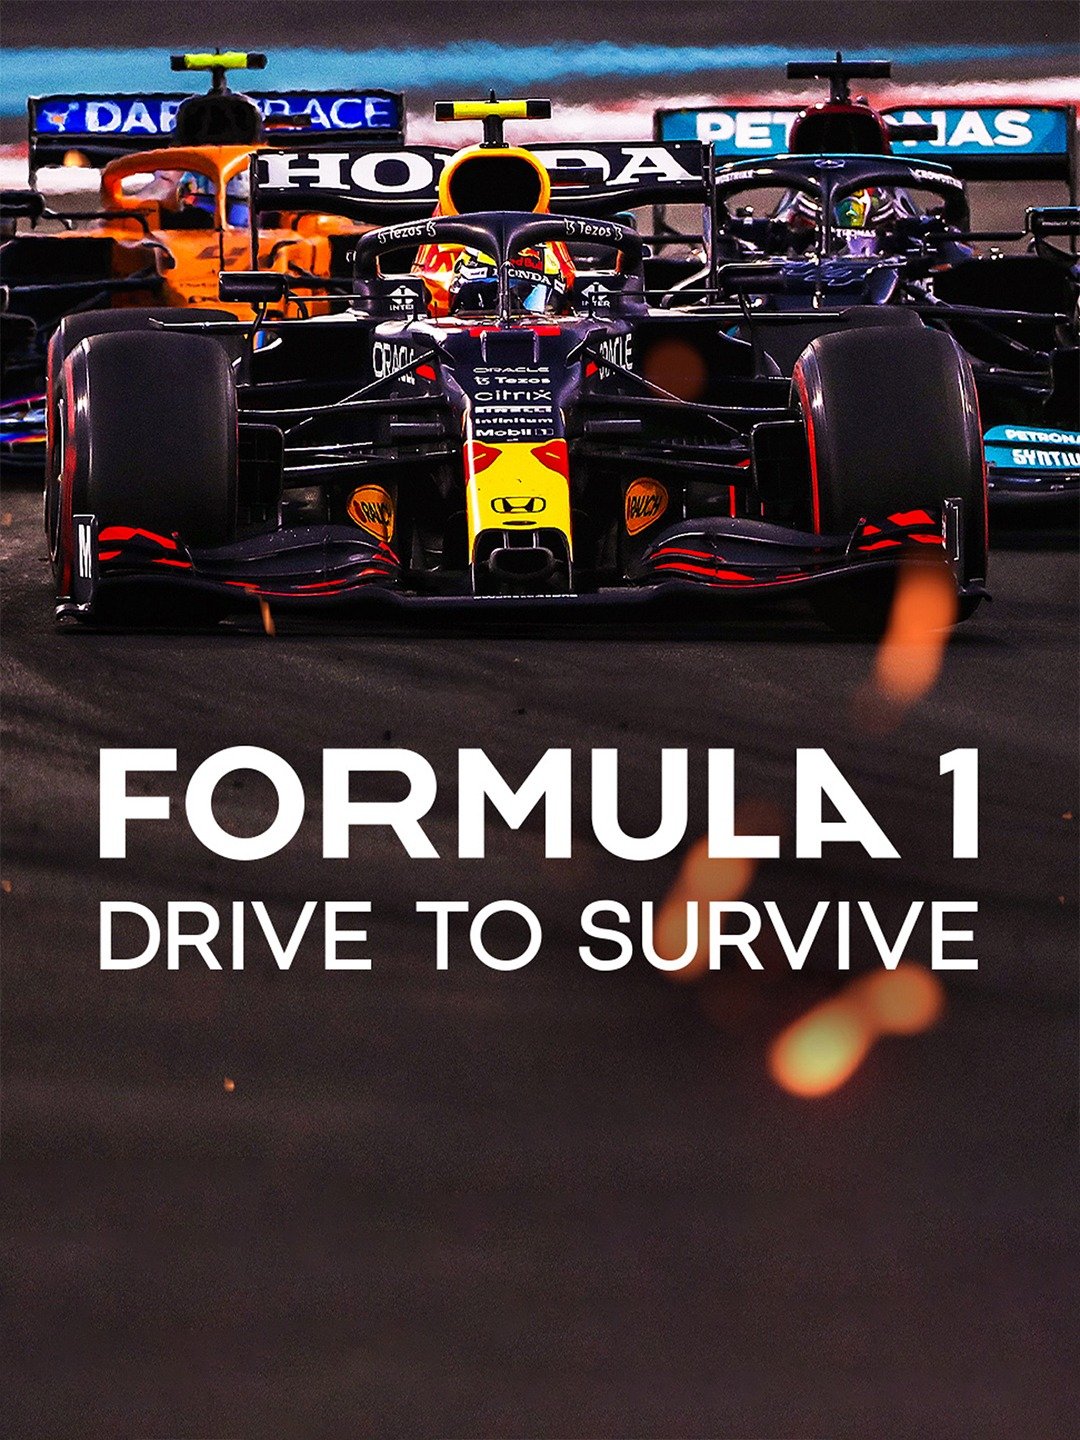 formula 1 drive to survive season 4 online